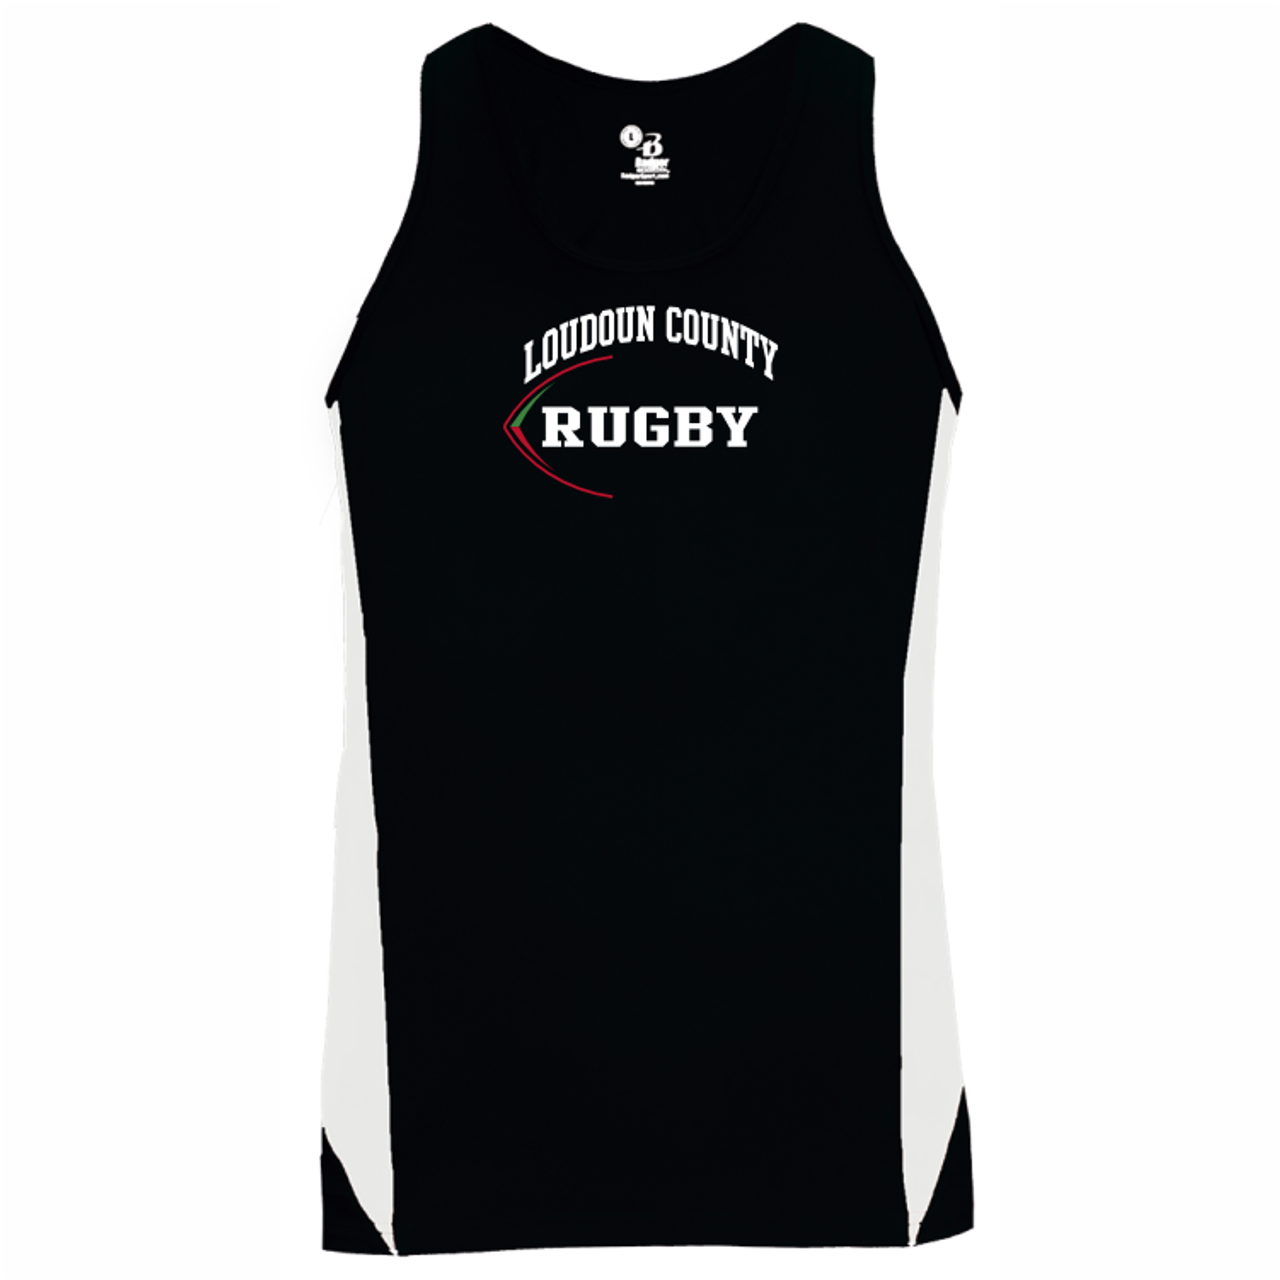 Loudoun Rugby Singlet